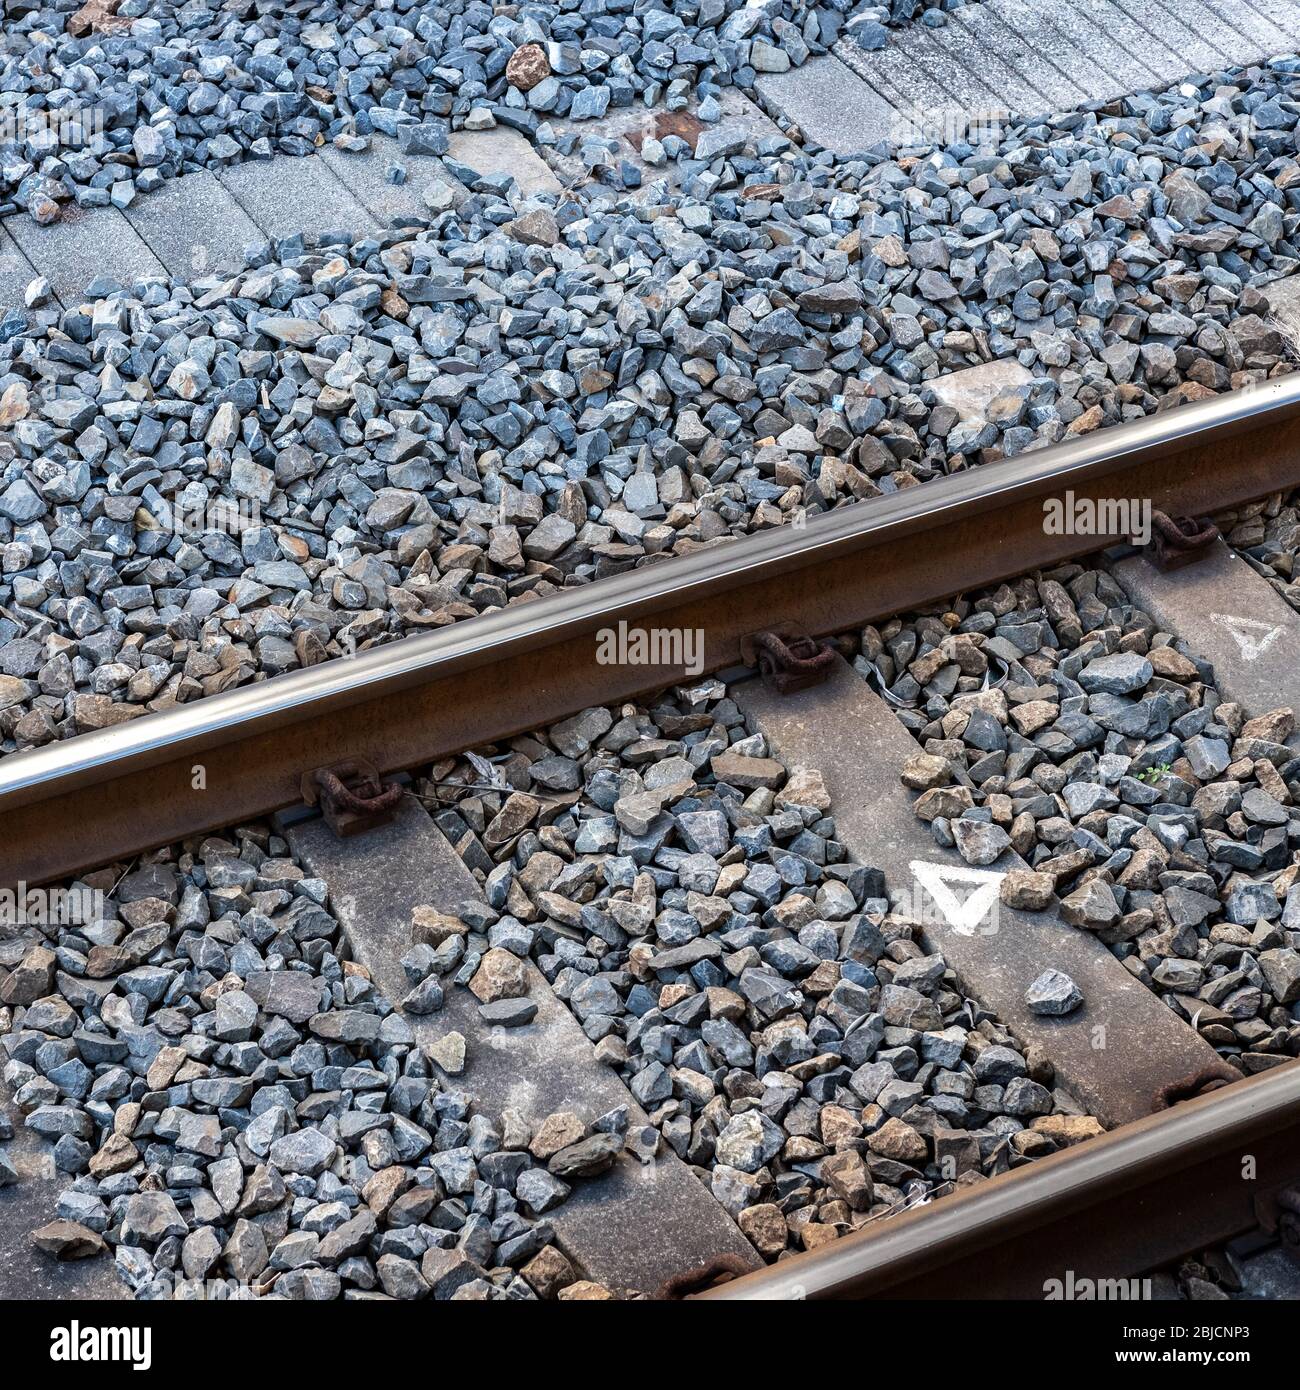 Japan, Railway train track and Pebbles Stock Photo